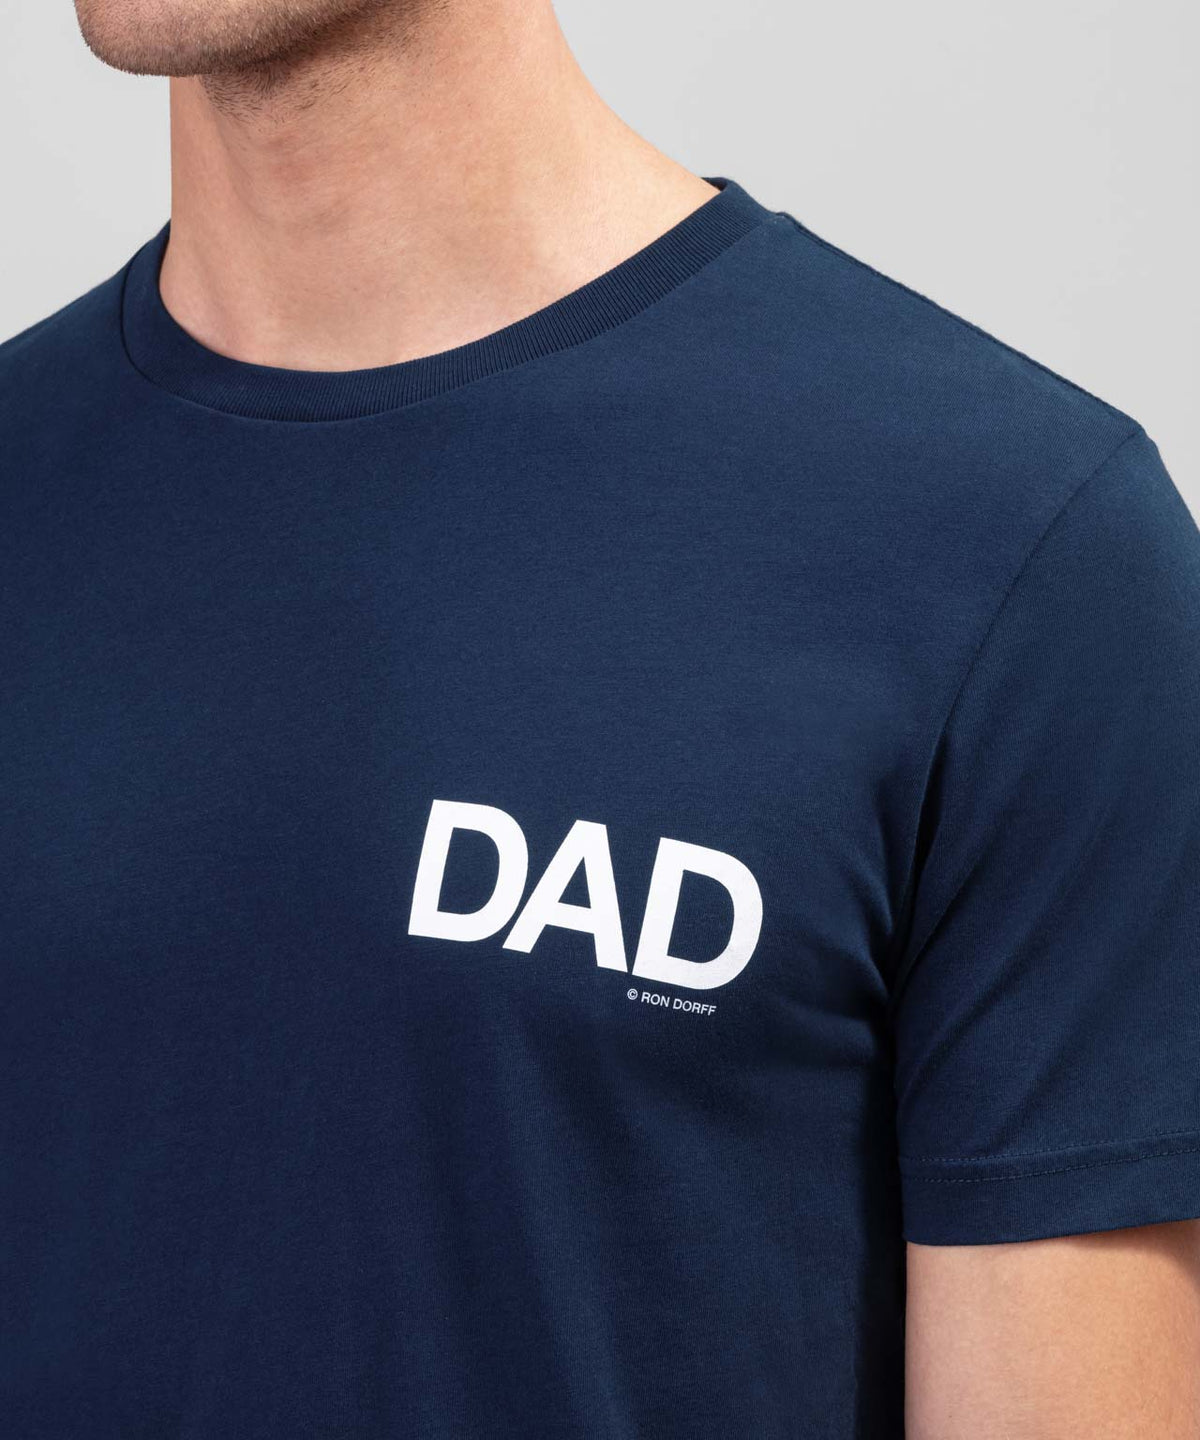 Camiseta DAD navy. Ron Dorff